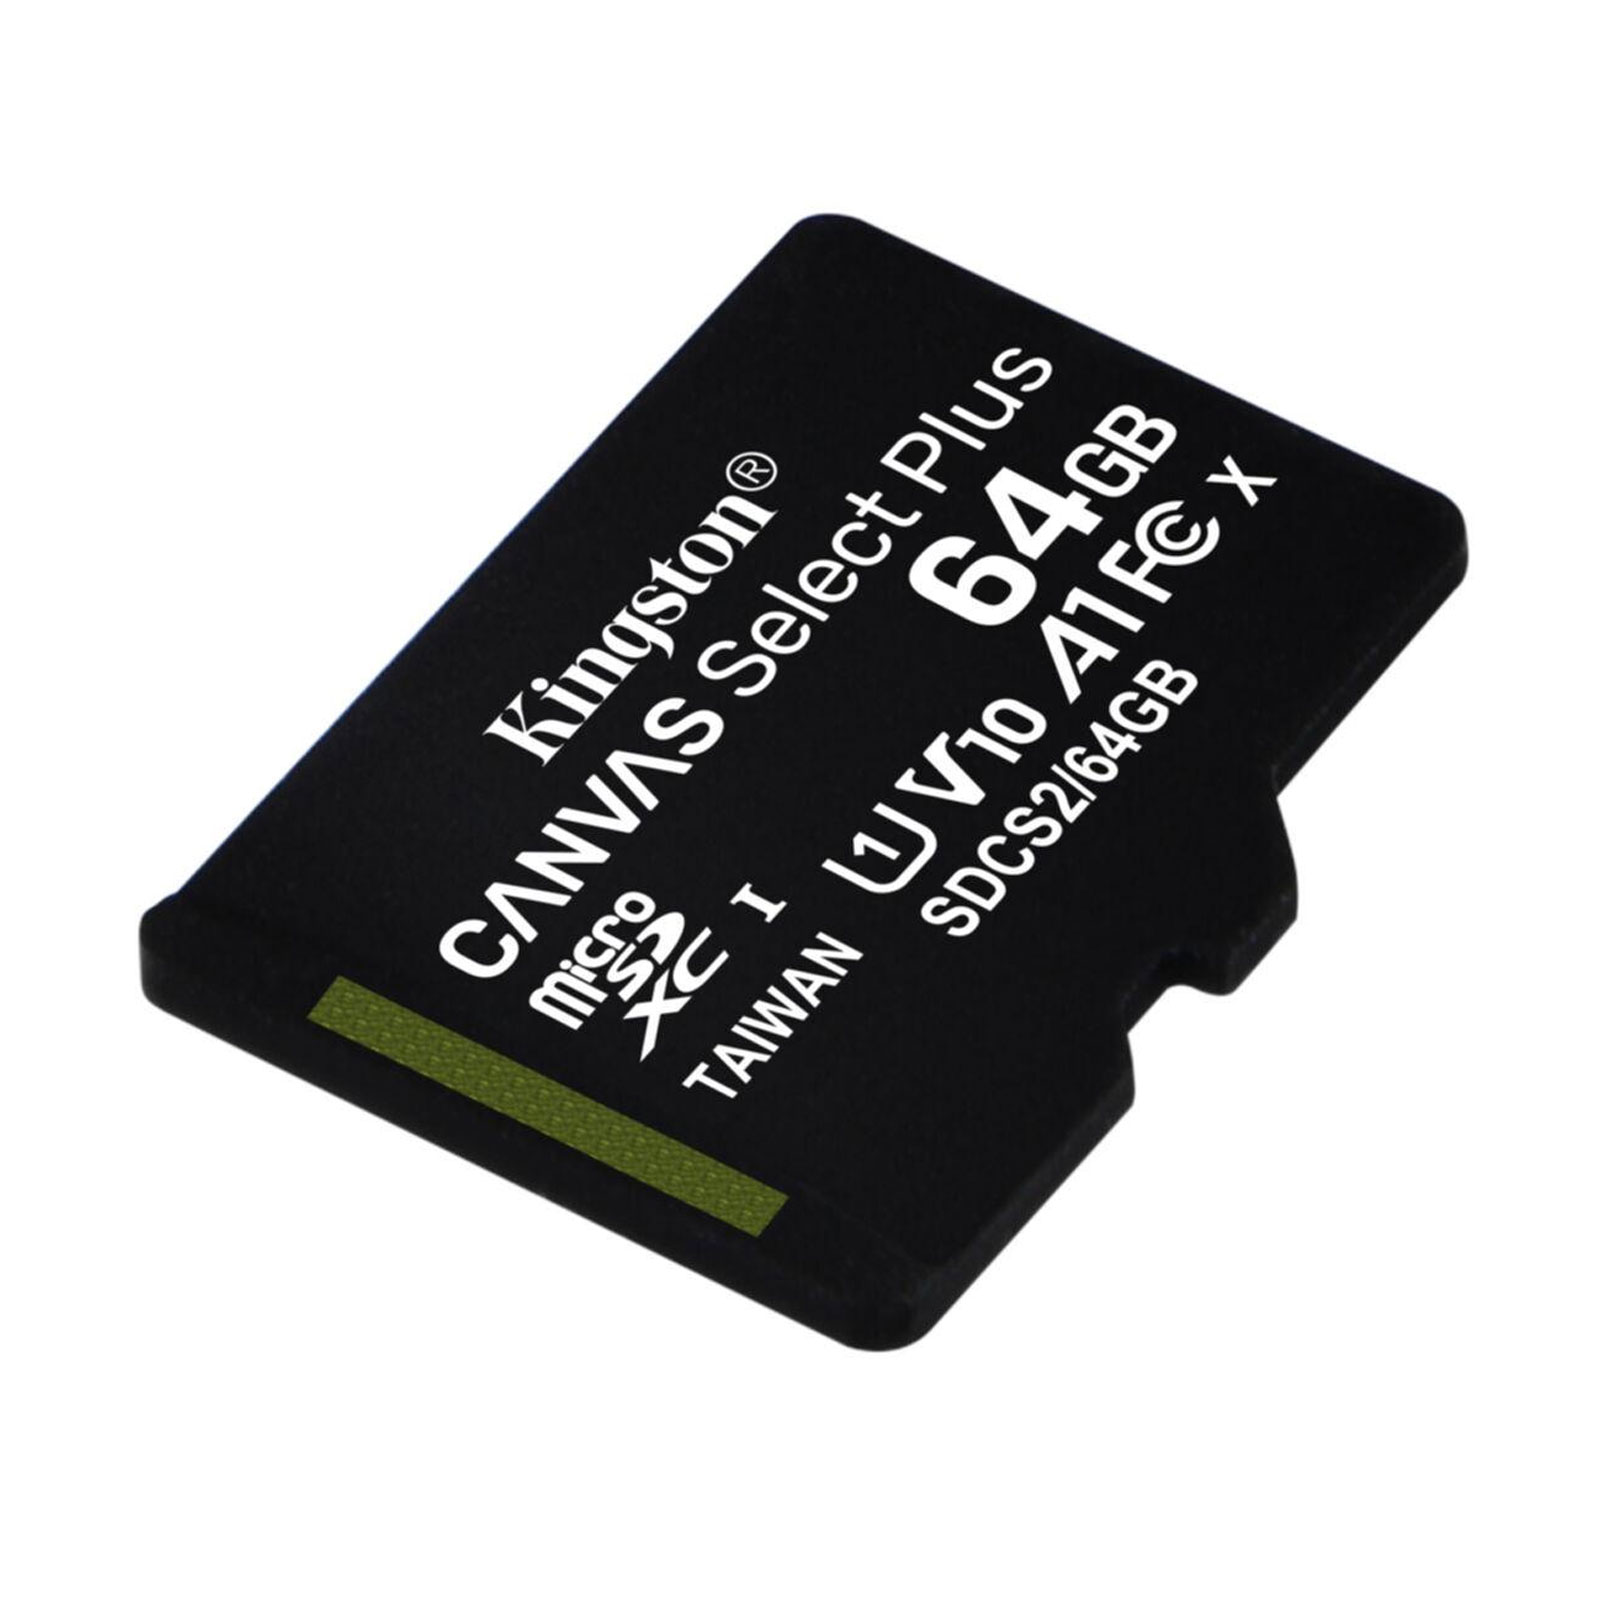 Kingston Canvas Micro SDXC 64GB Speicherkarte